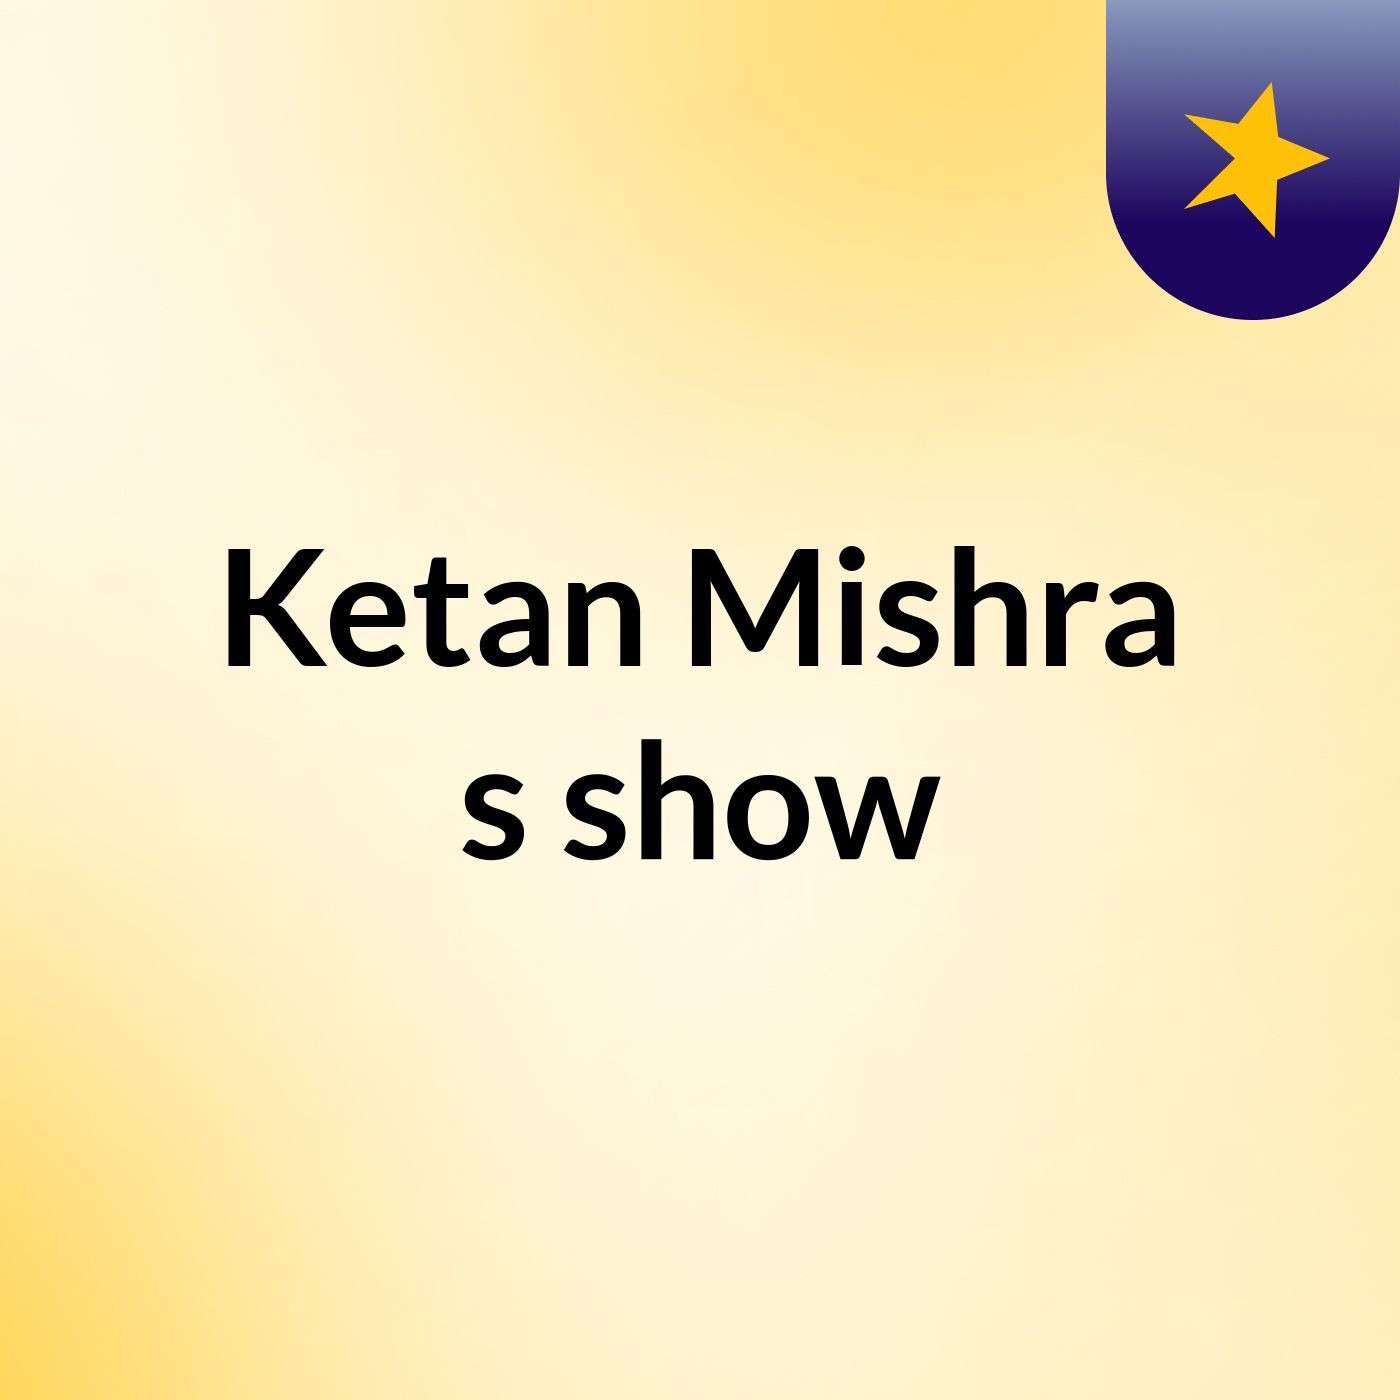 Ketan Mishra's show